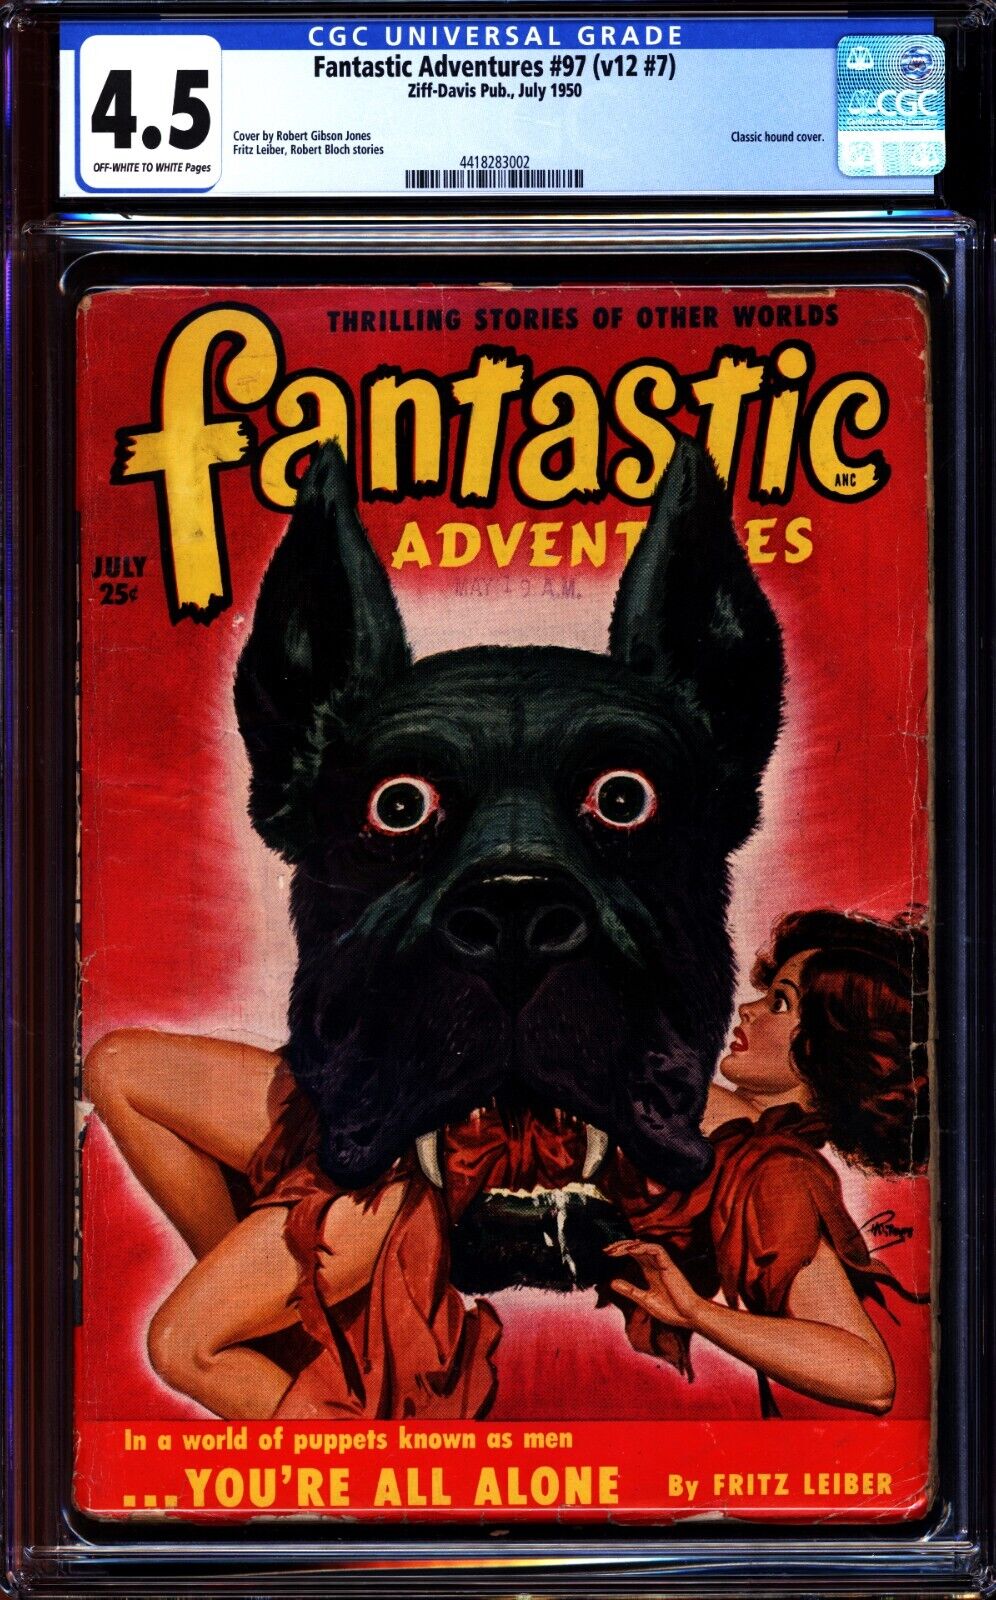 Fantastic Adventures Pulp 97 CGC 4.5 Classic Hound cover Ziff-Davis July 1950